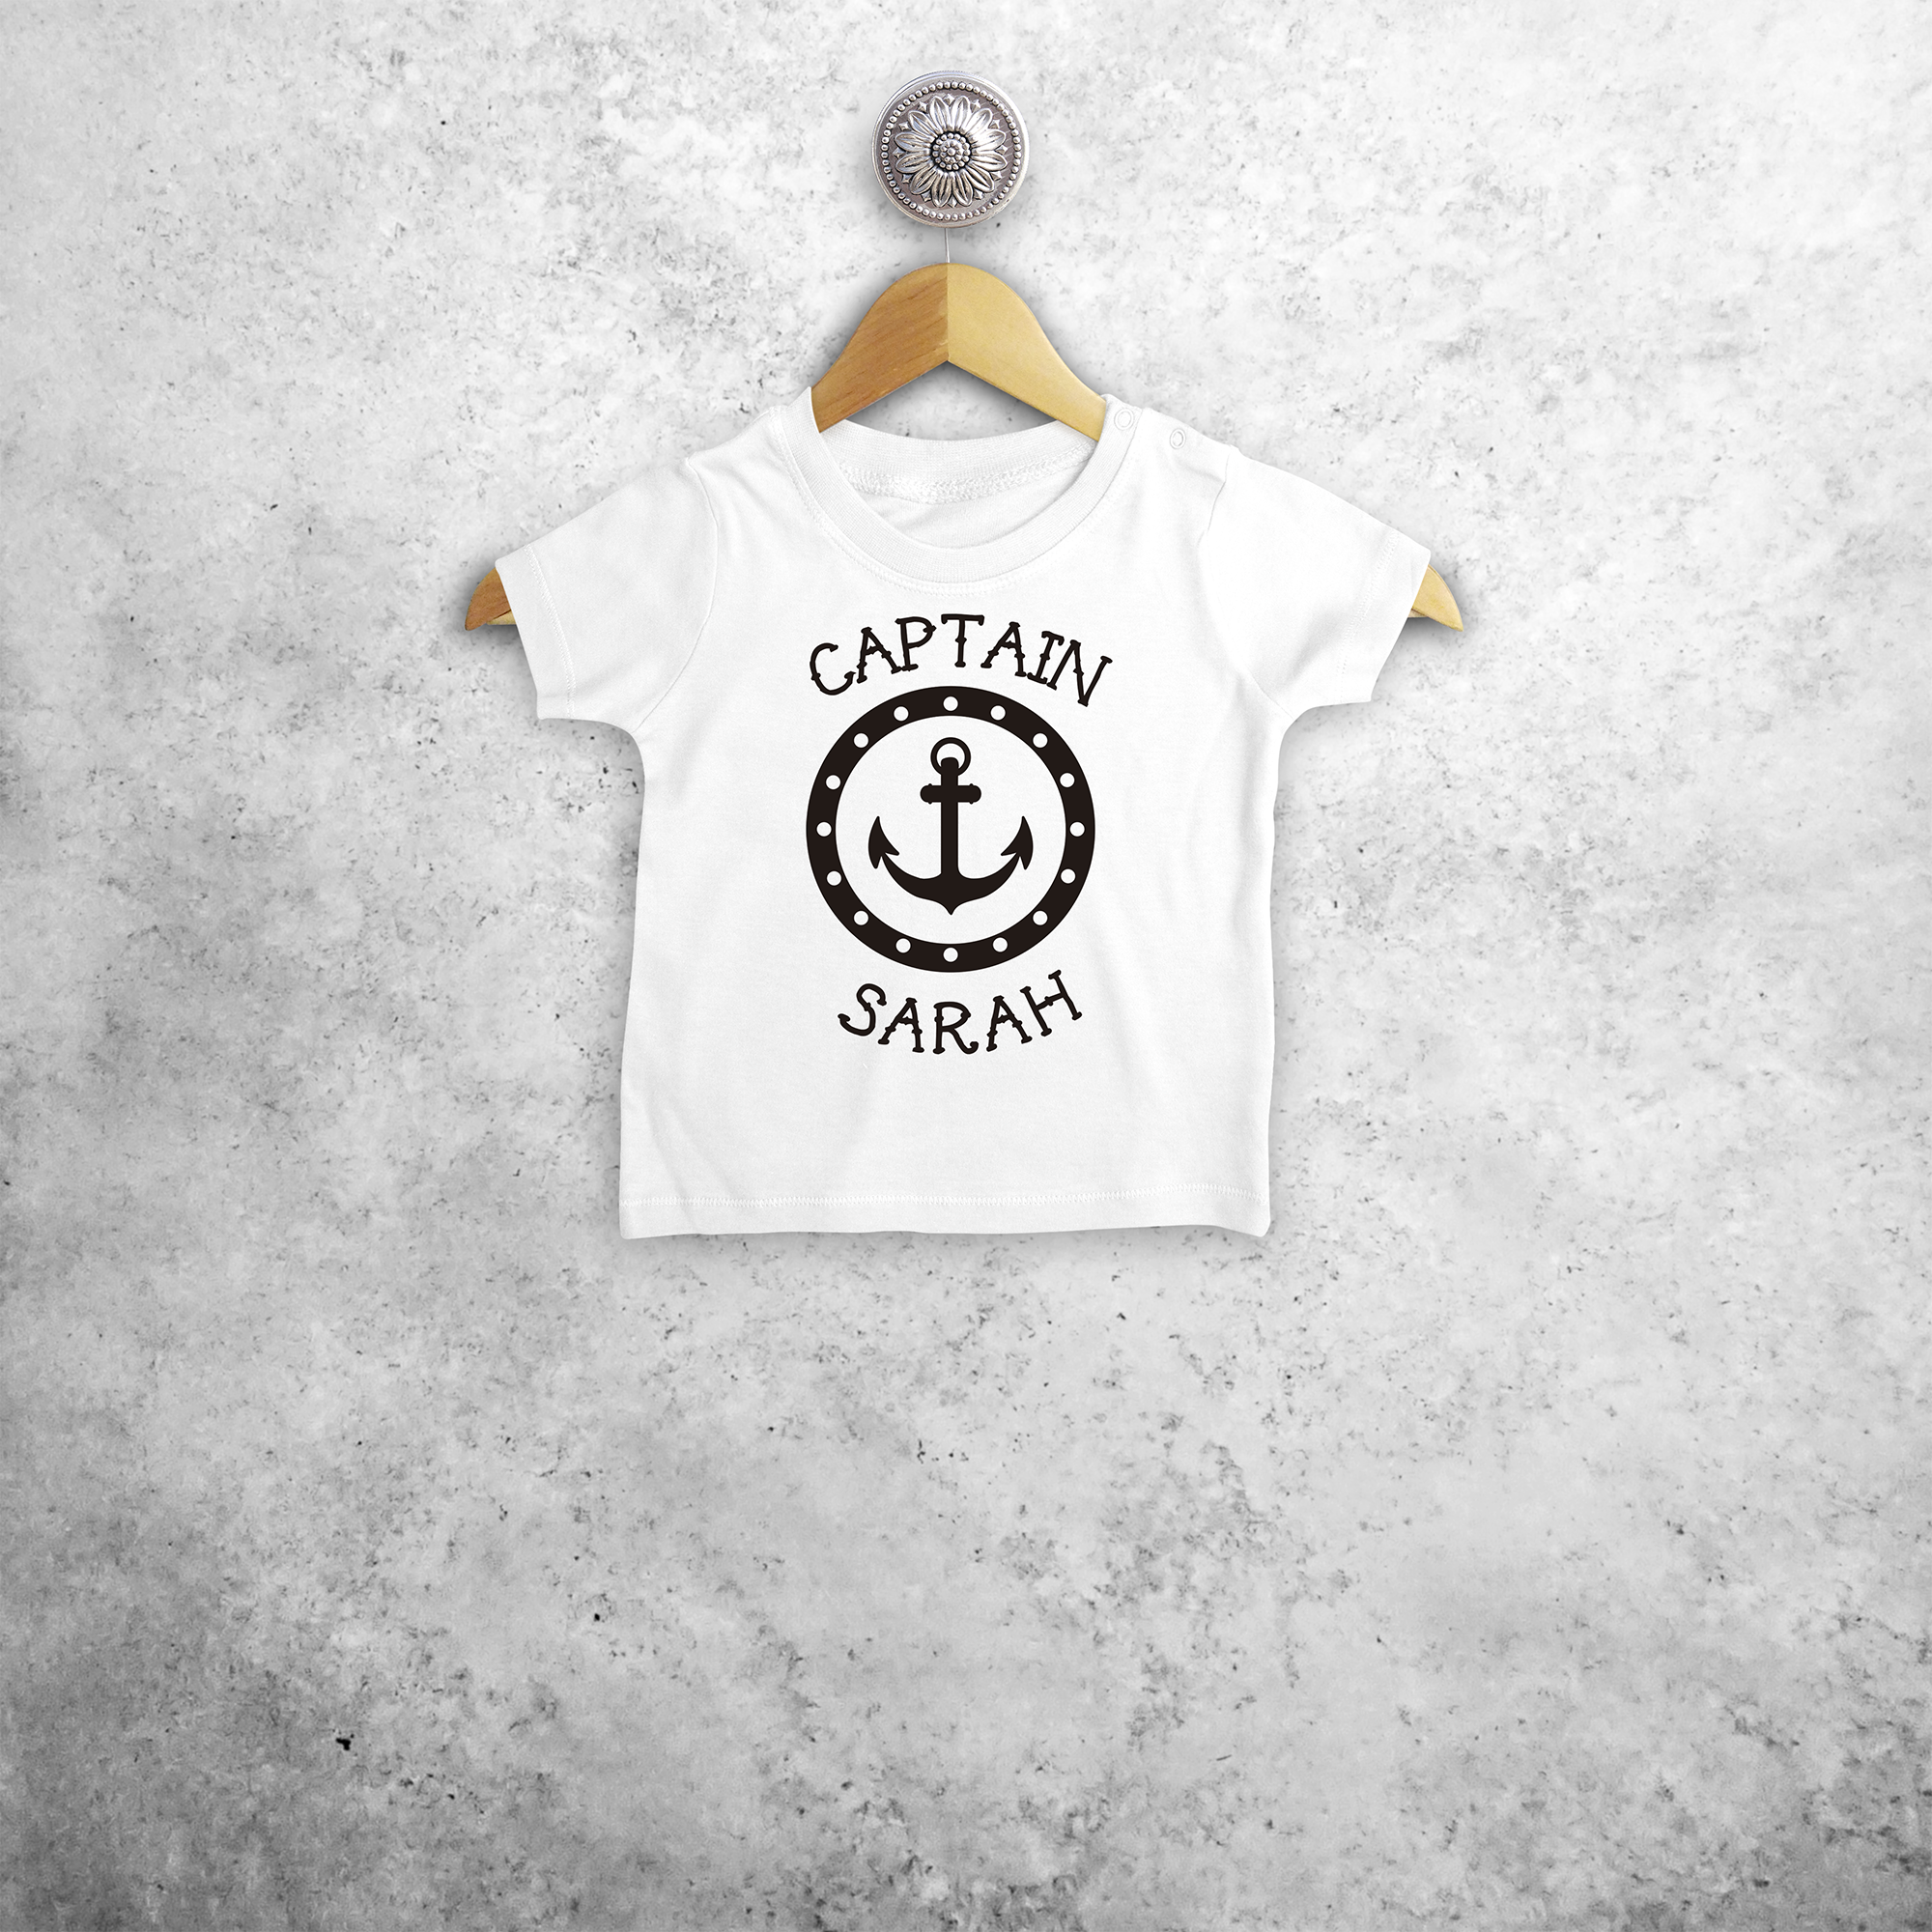 'Captain' baby shortsleeve shirt